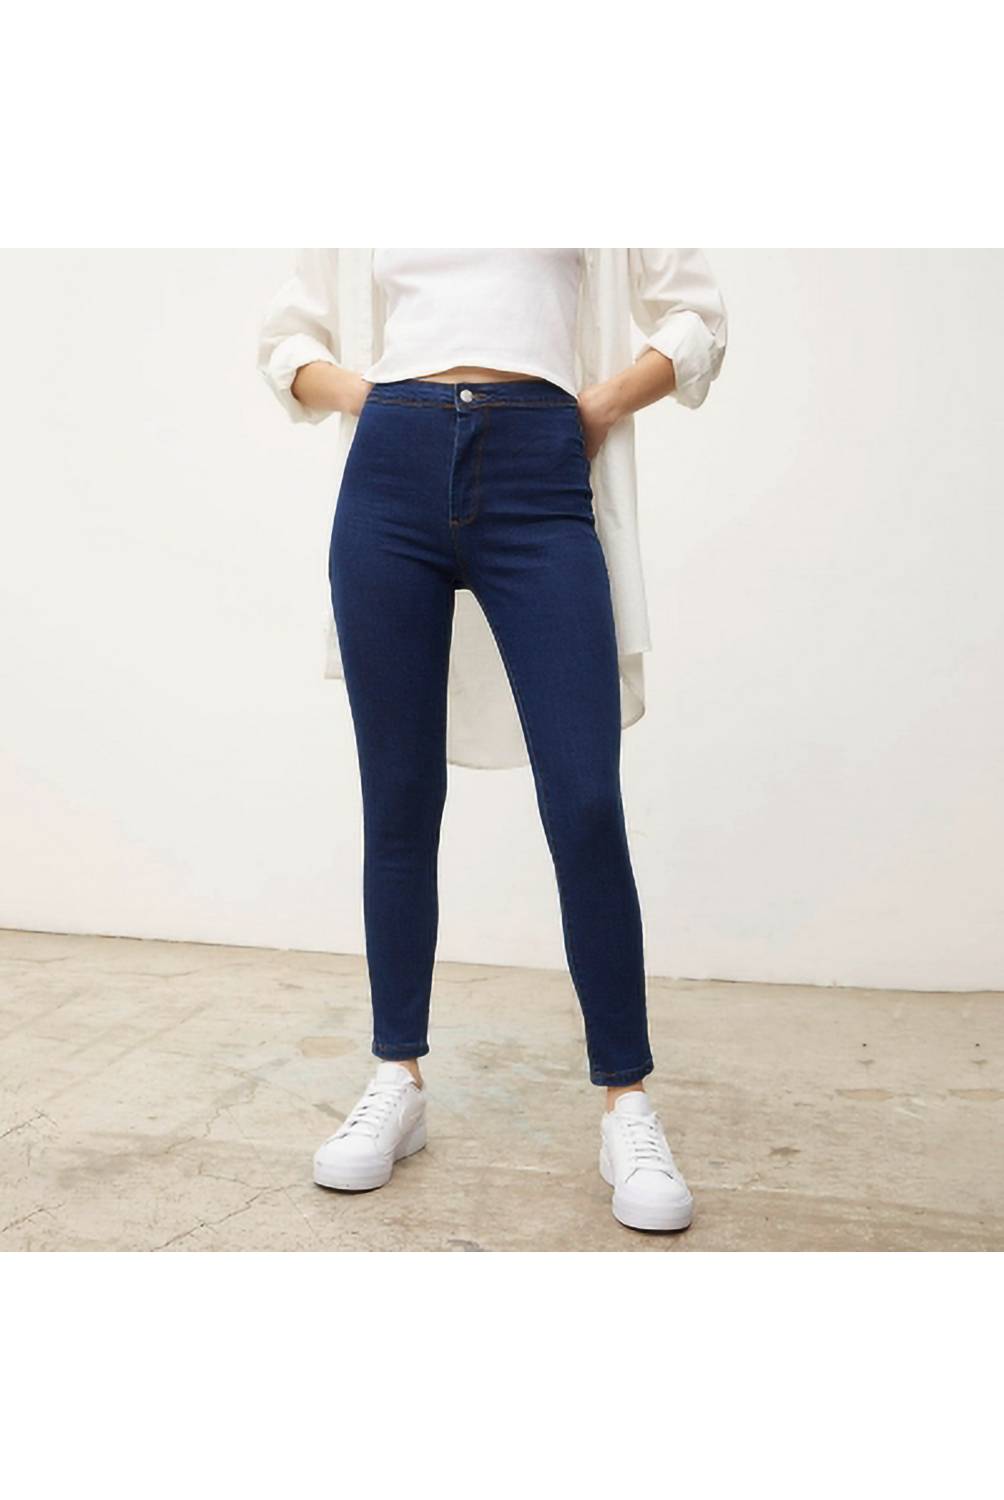 Jeans skinny De Talle Alto 721™ conLyocell